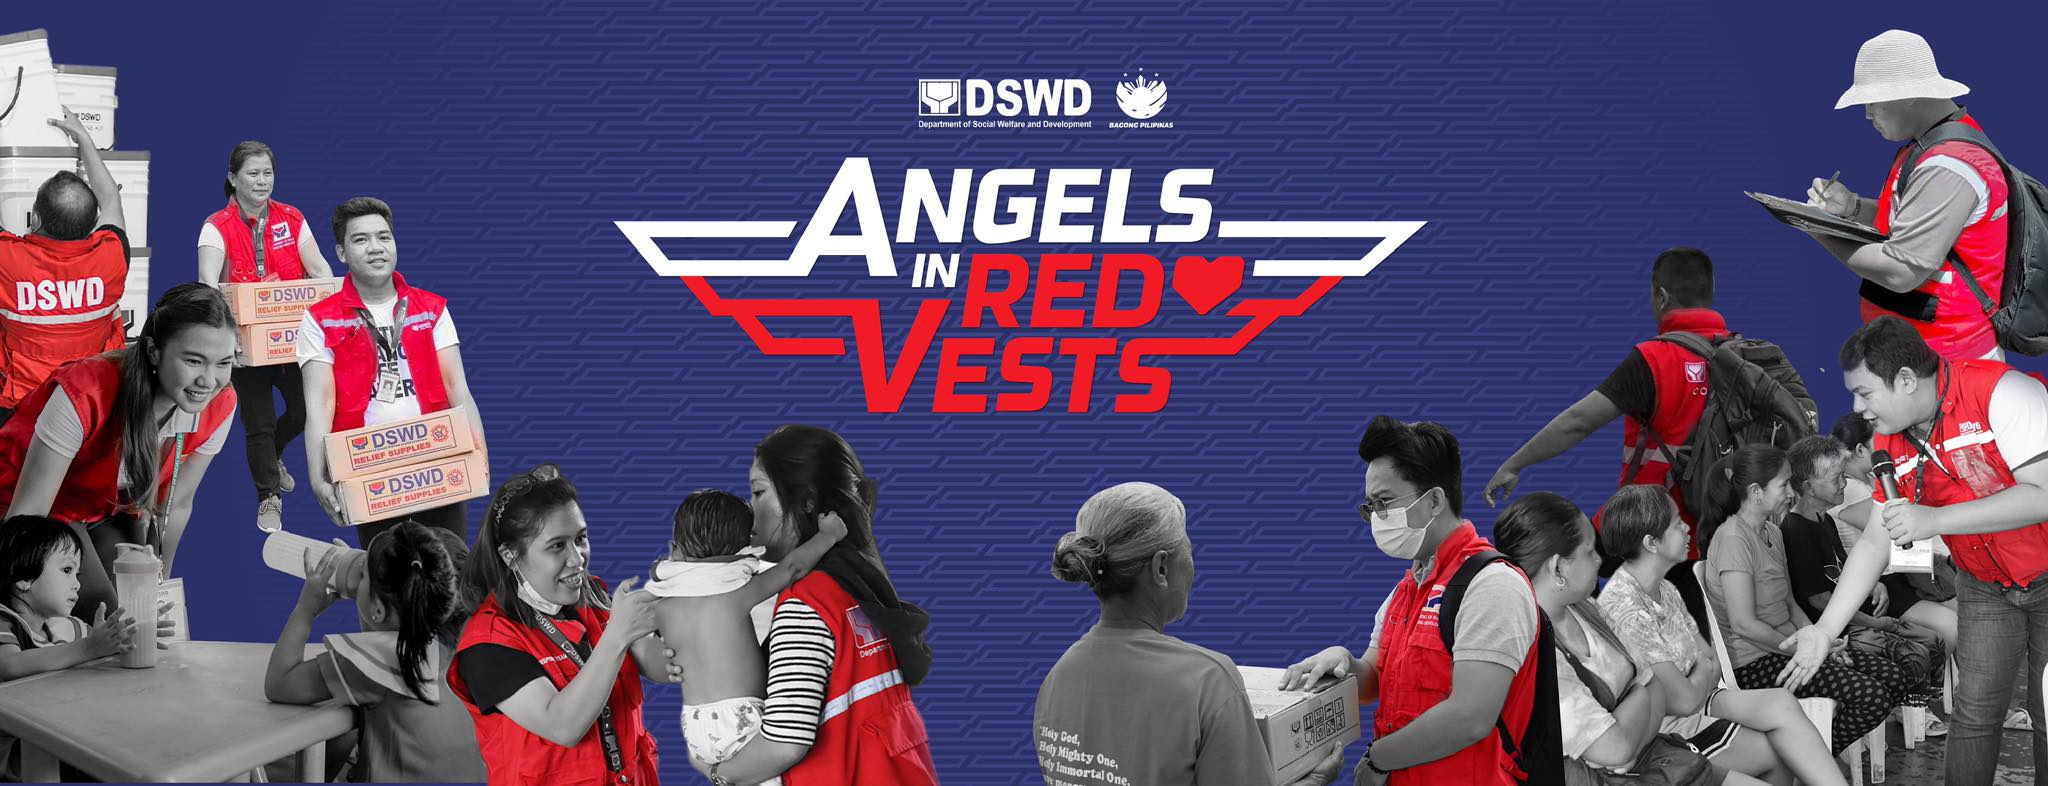 angel in red vest banner